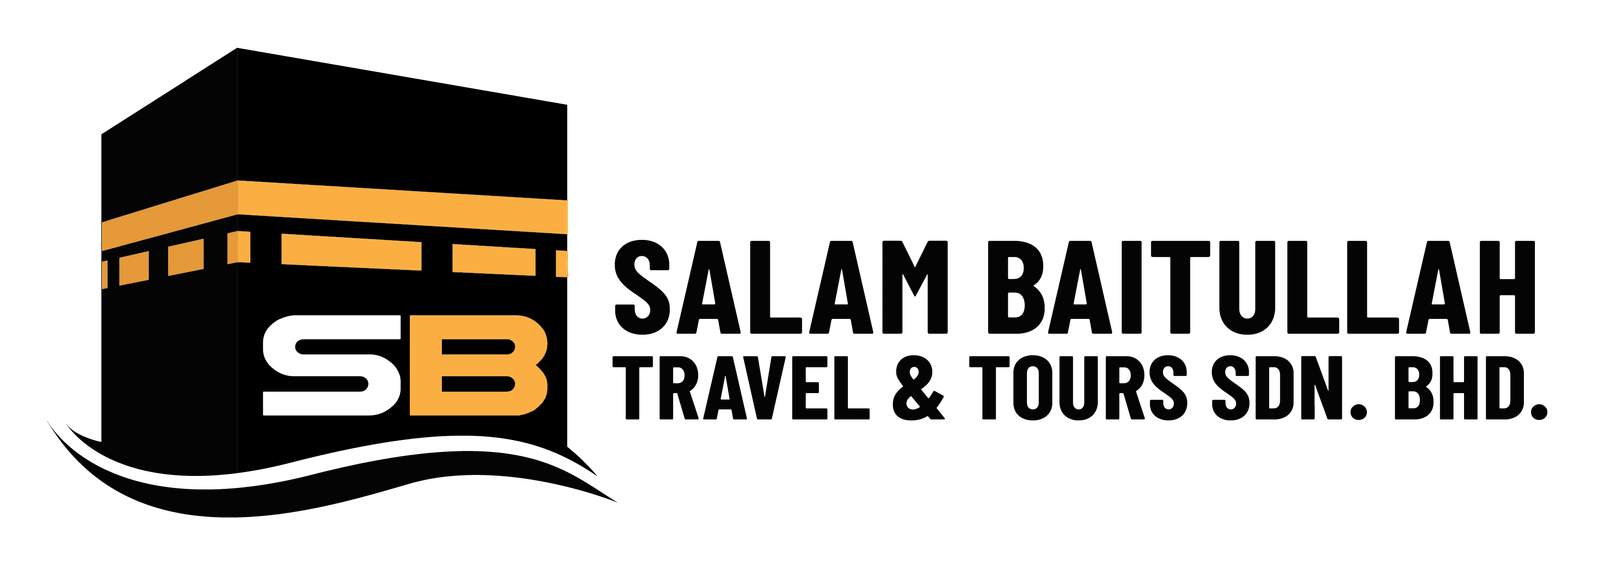 Salam Baitullah Travel & Tours Sdn Bhd